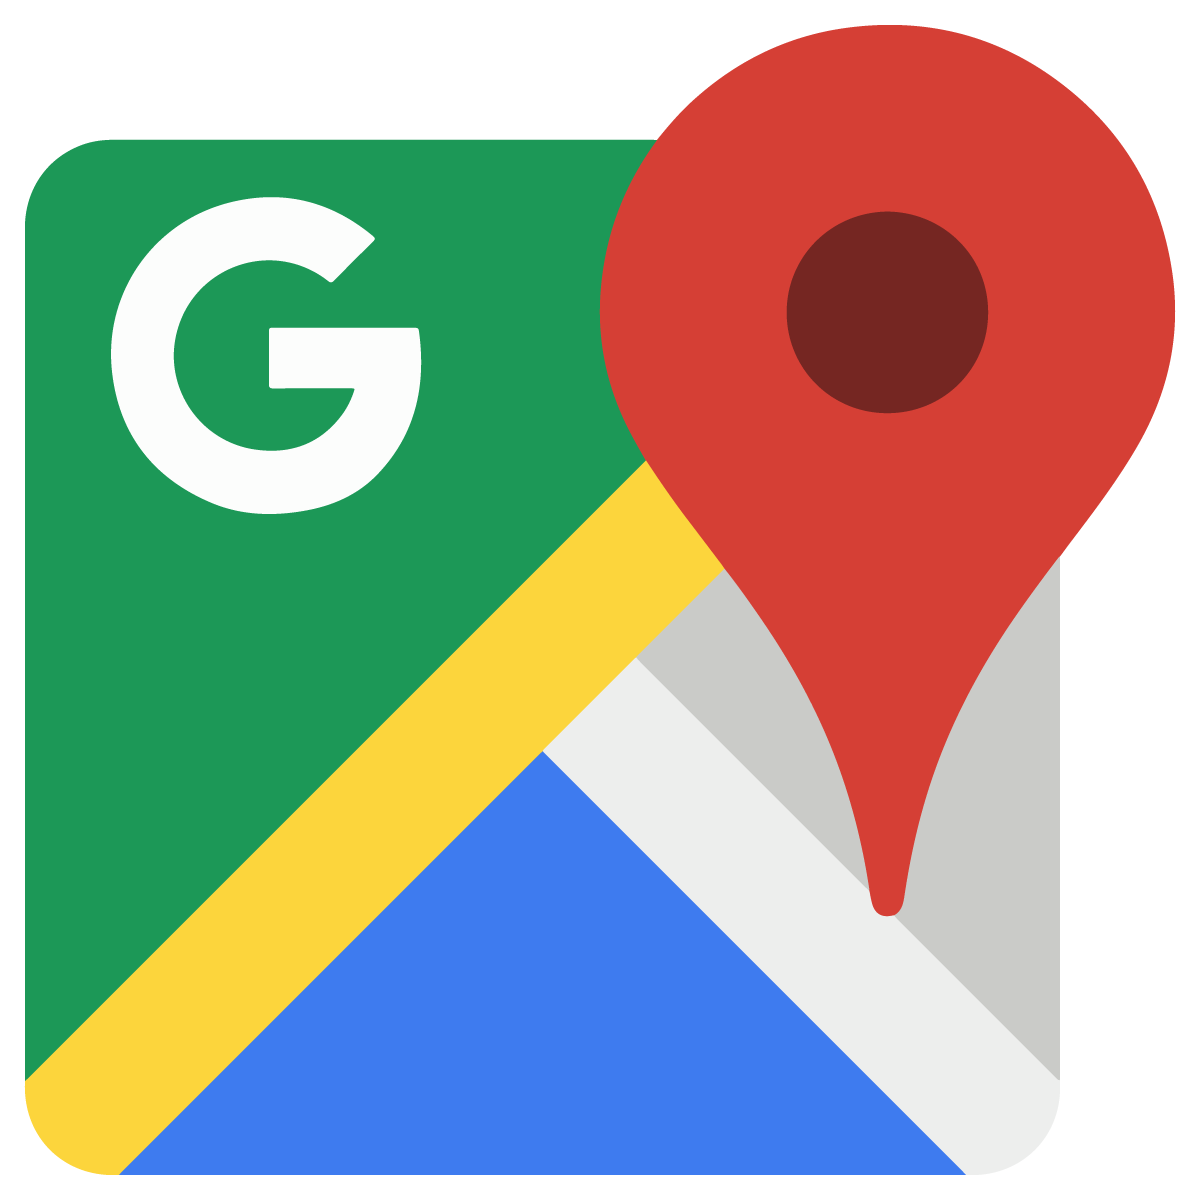 List 91+ Wallpaper Google Maps Signs And Symbols Full HD, 2k, 4k